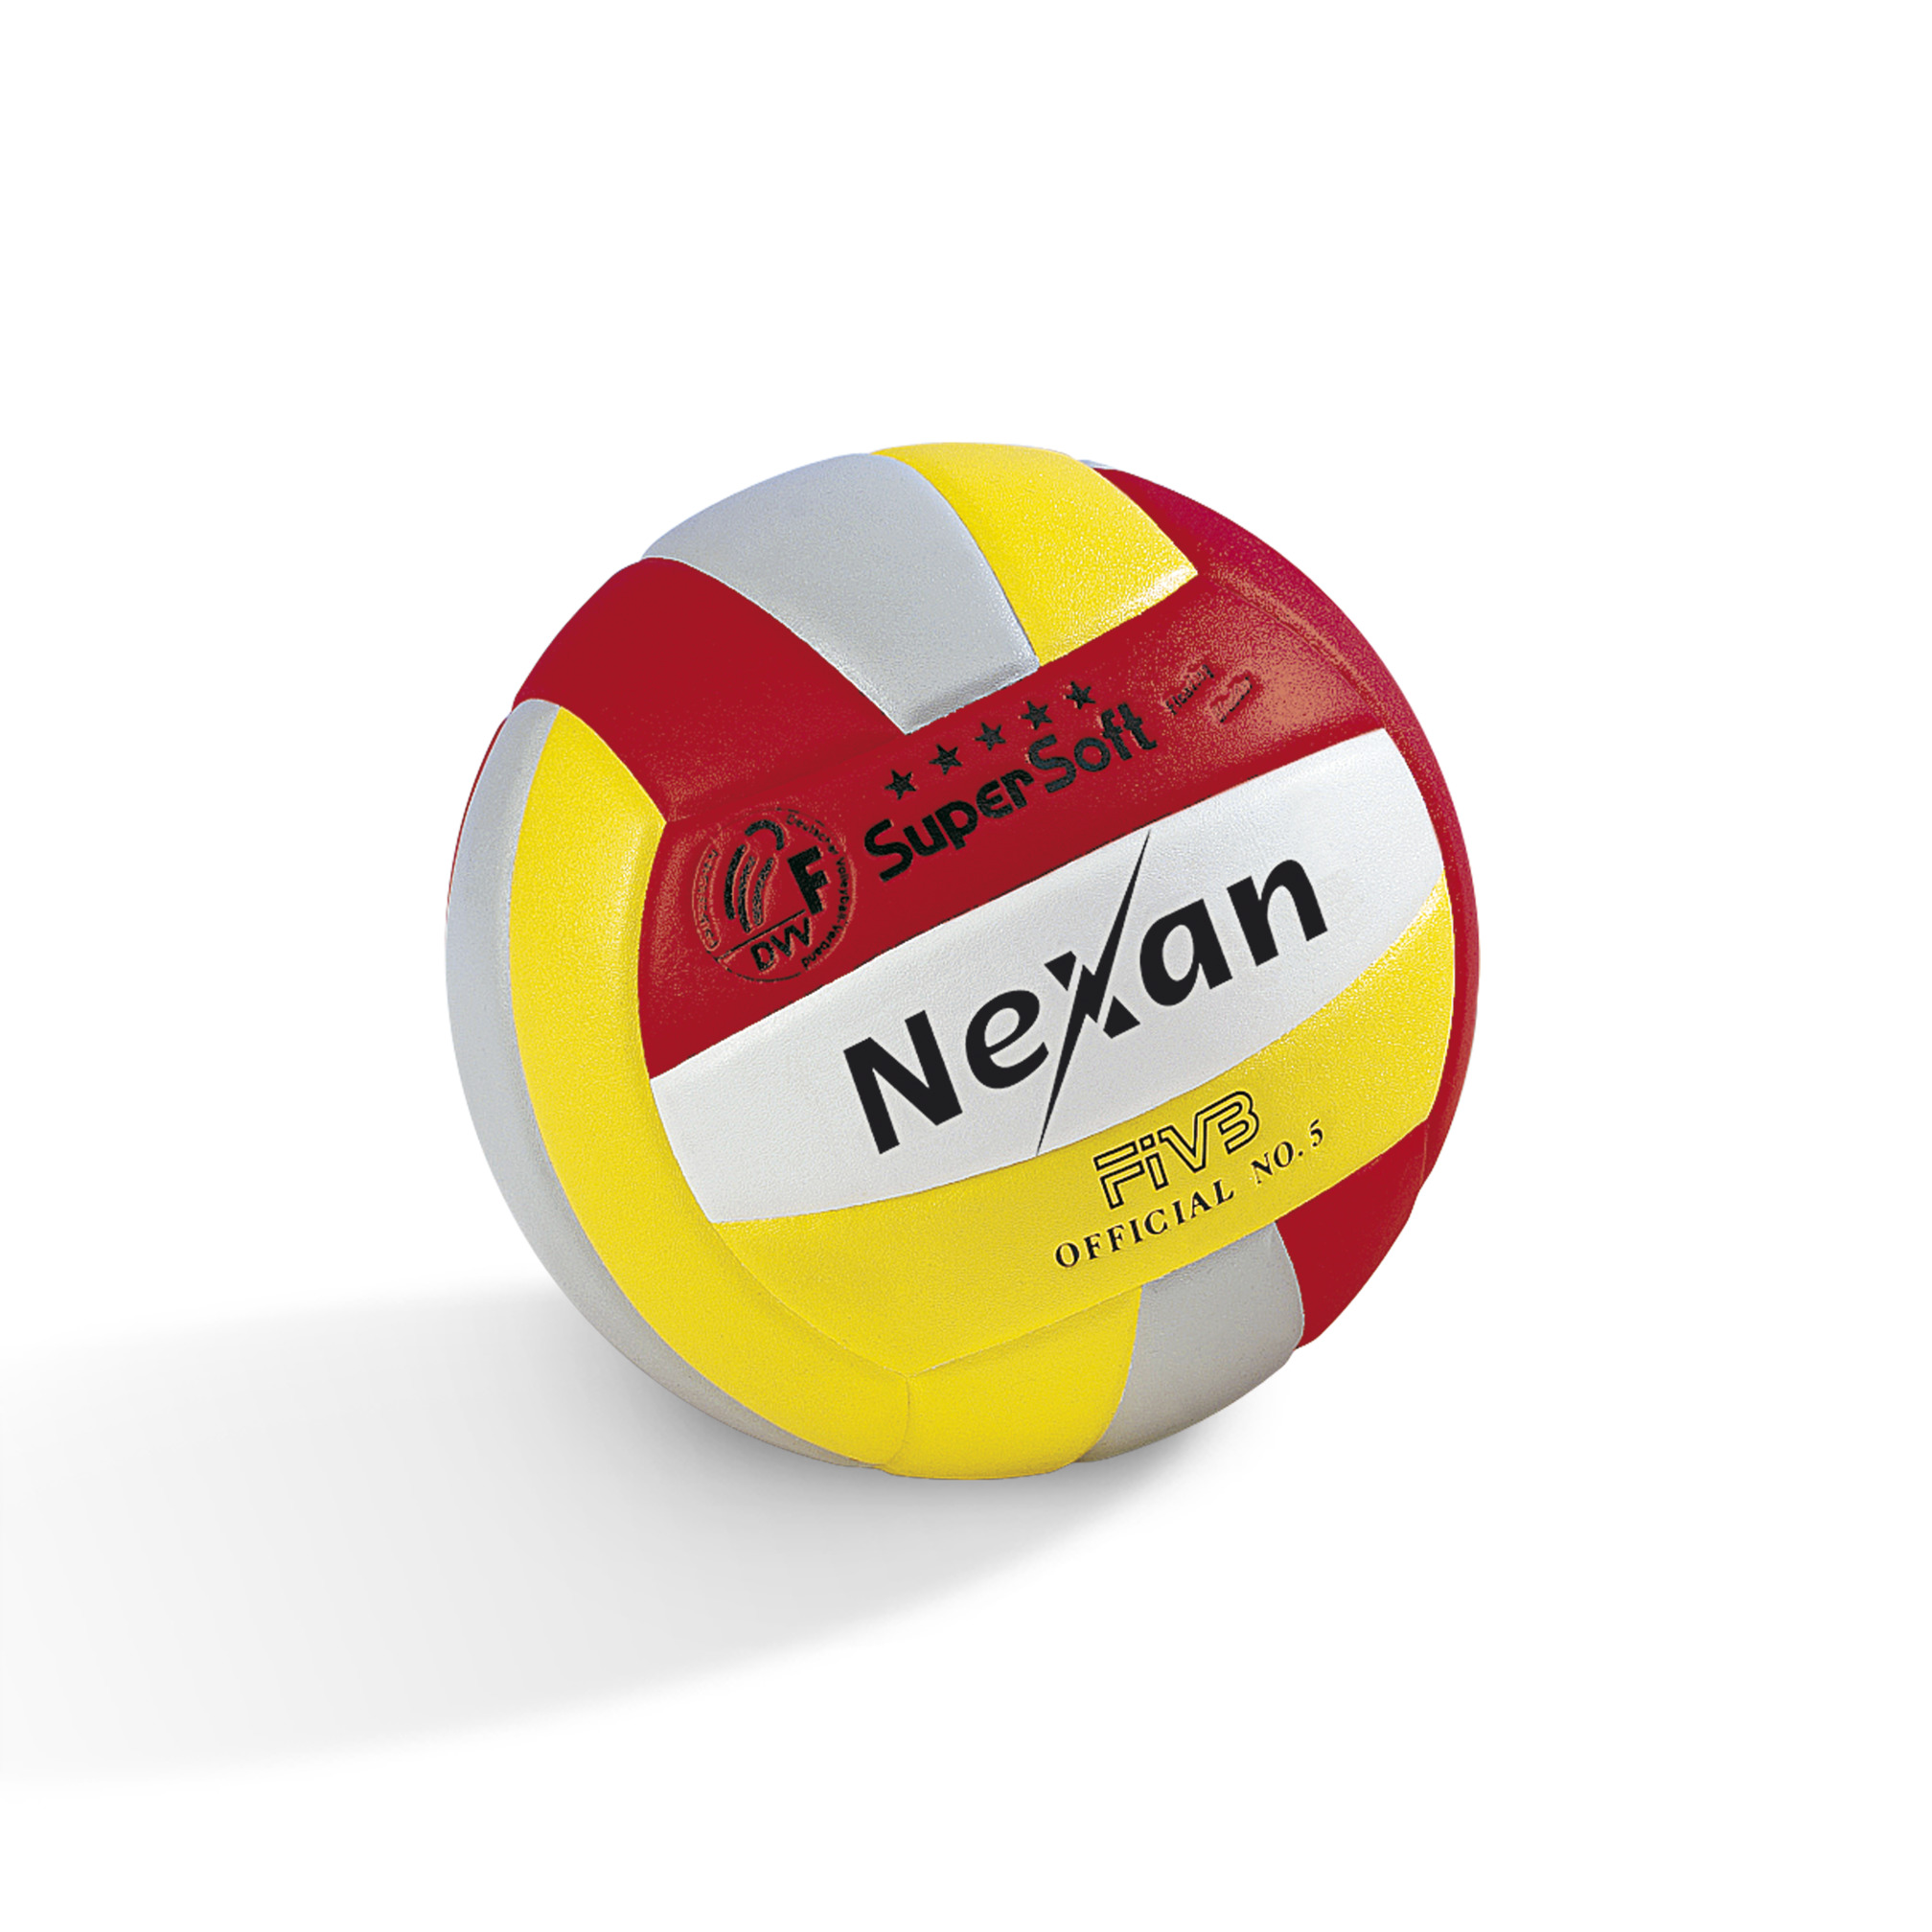 Nexan Volleyball PRO VPC-5 Light, size 5